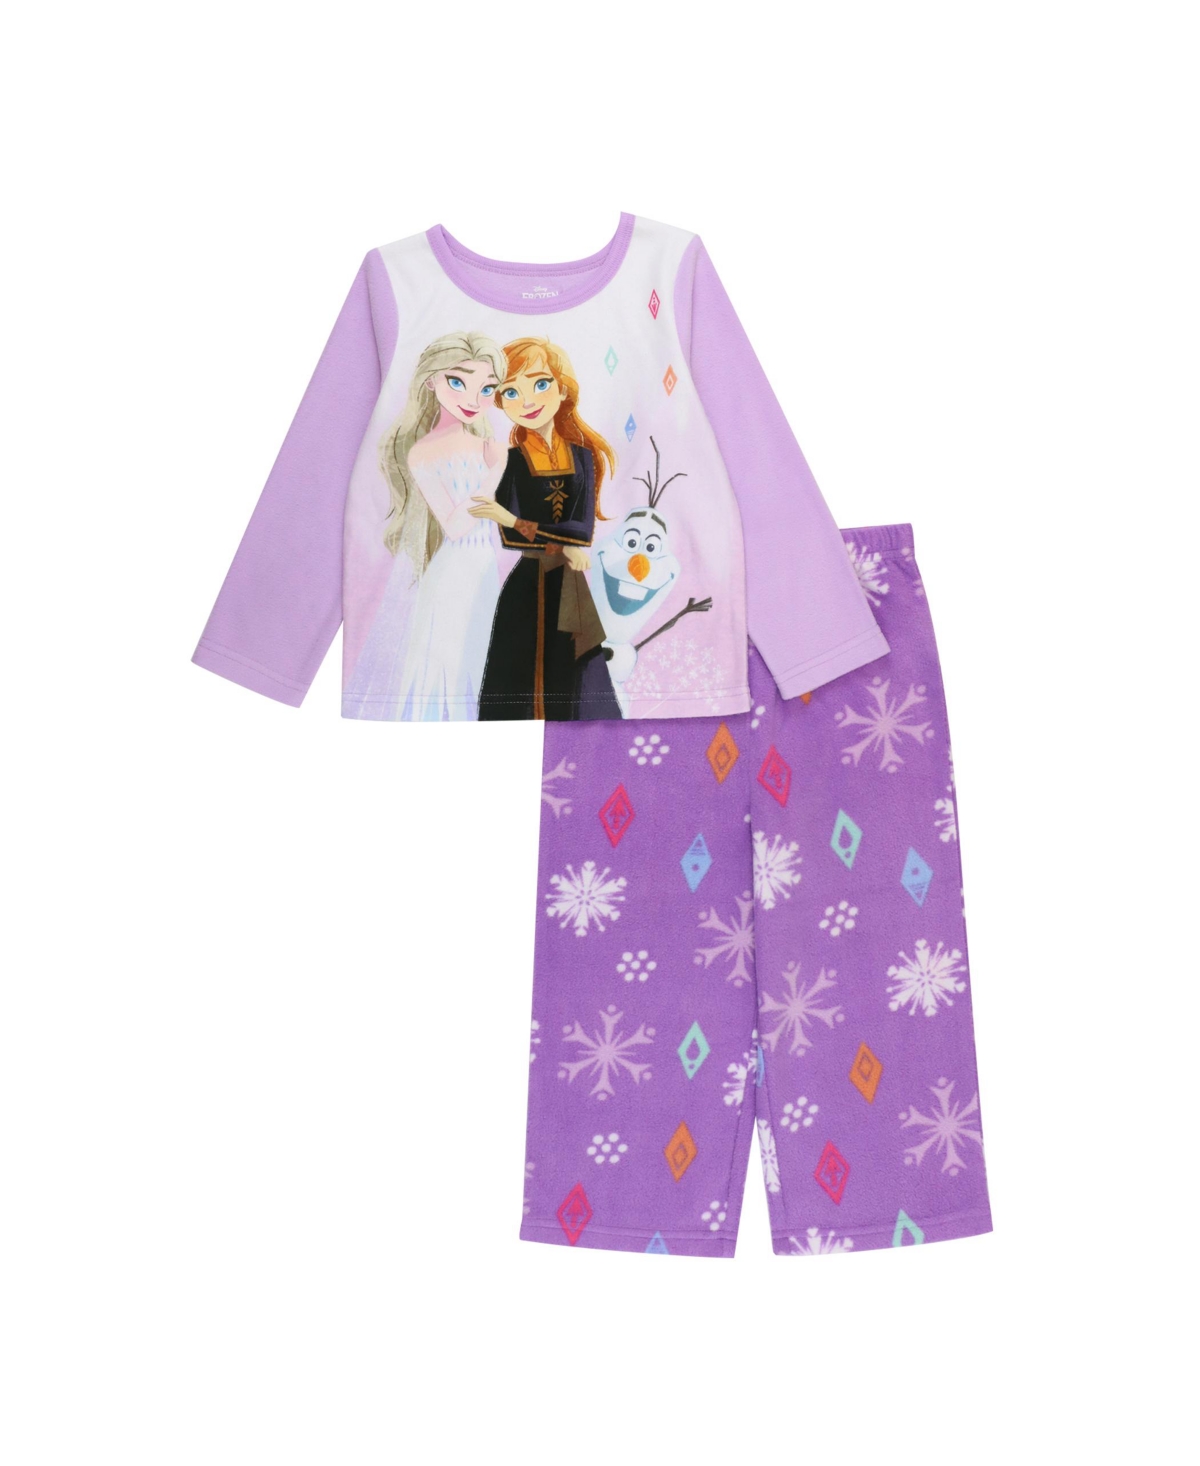 Frozen Kids' Big Girls 2 Top And Pajama, 2 Piece Set In Assorted